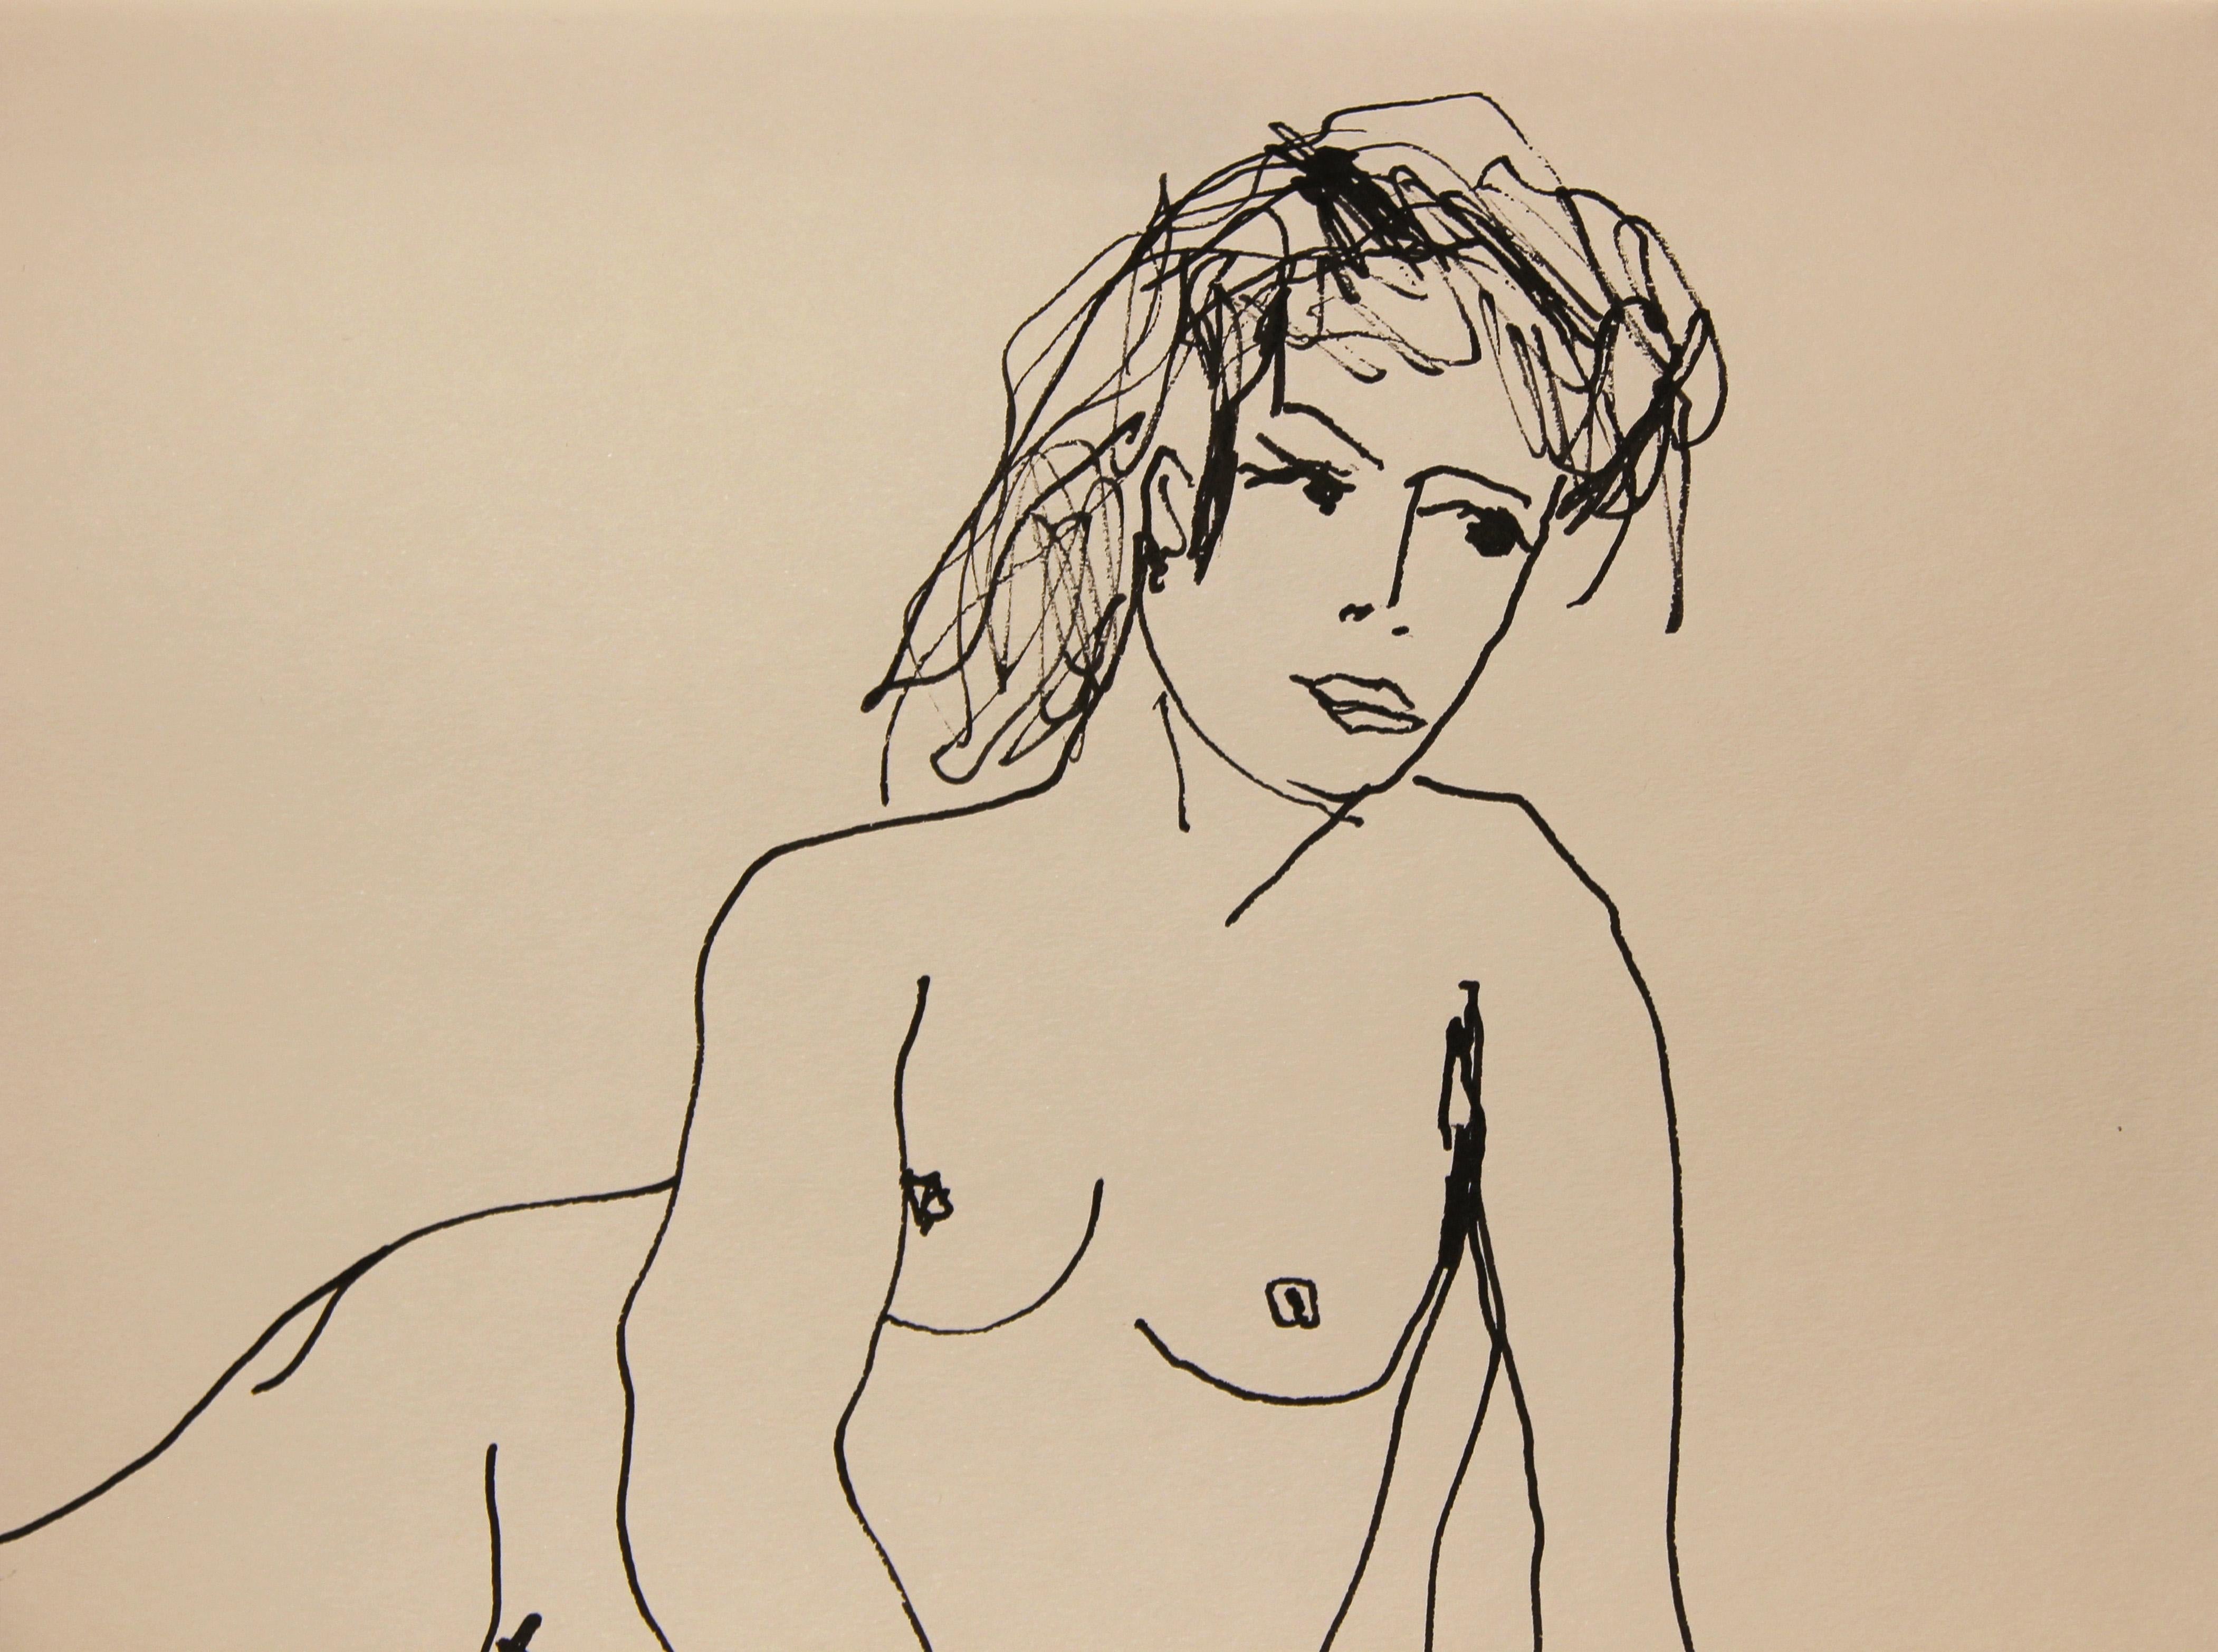 Modern Abstract Black Ink Line Drawing of a Reclining Female Nude - Beige Figurative Art by Frank Dolejska